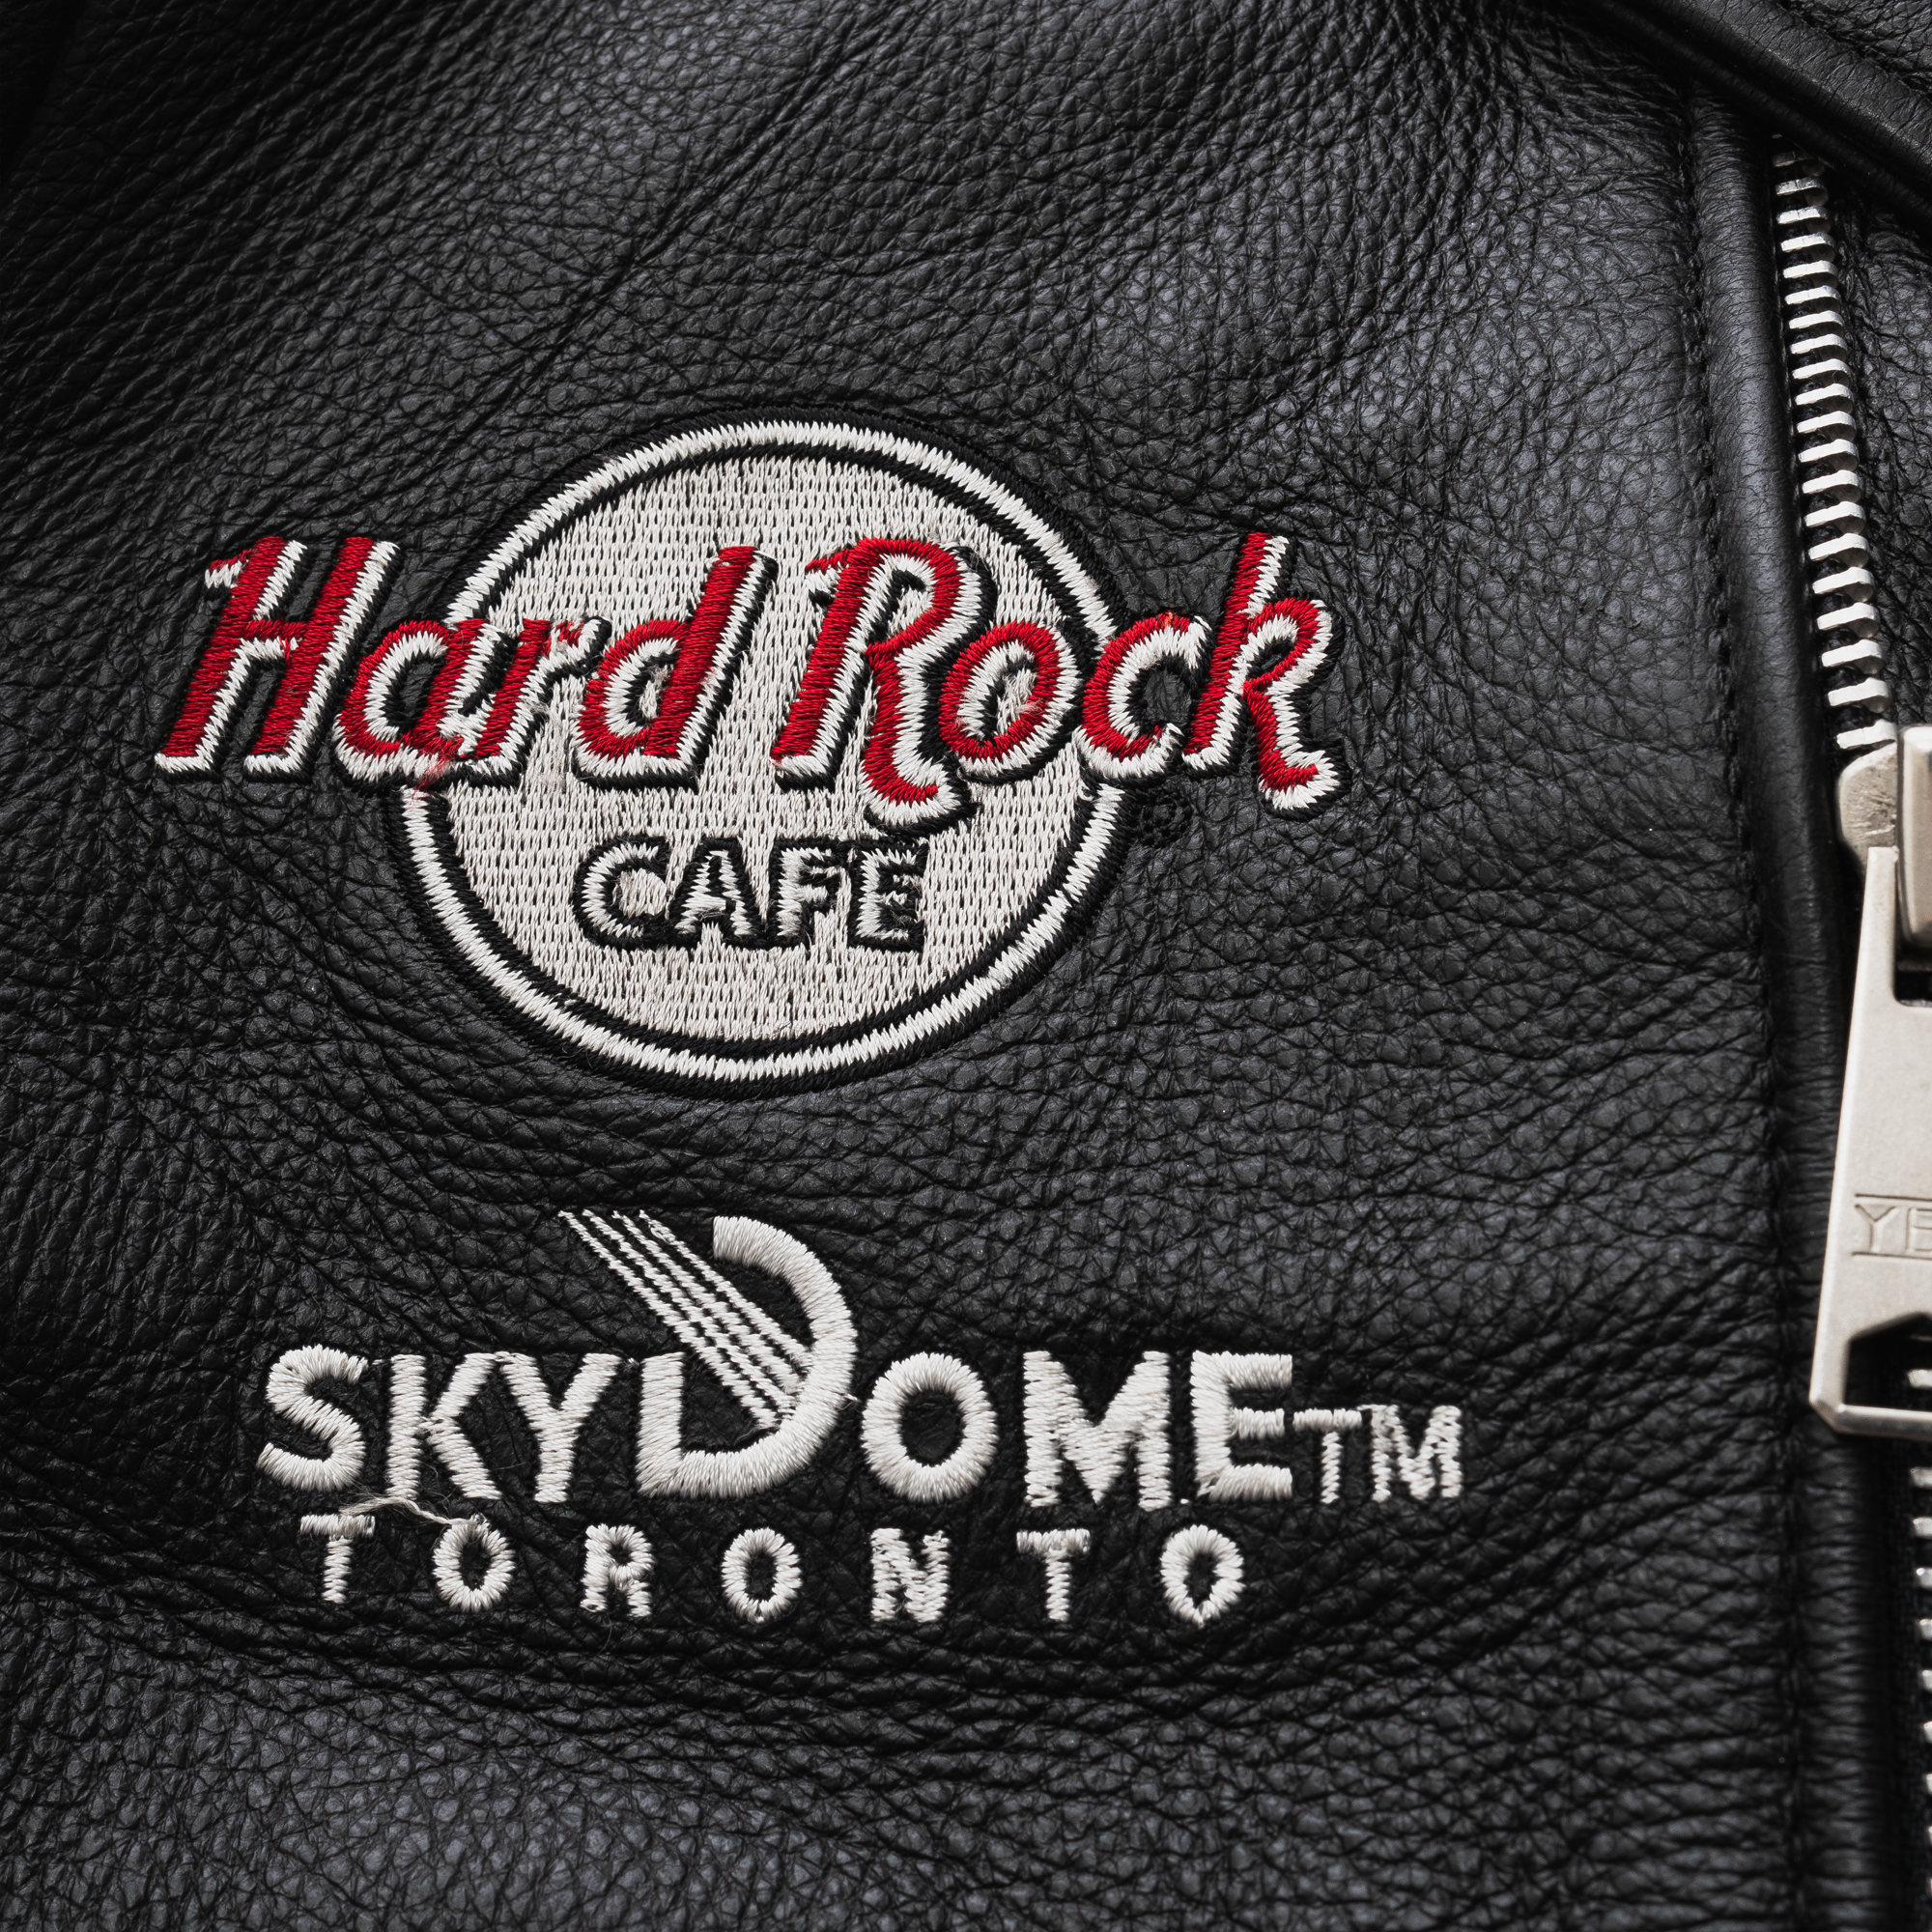 Hard Rock Cafe Skydome Toronto Biker Souvenir Leather Jacket Black-PLUS